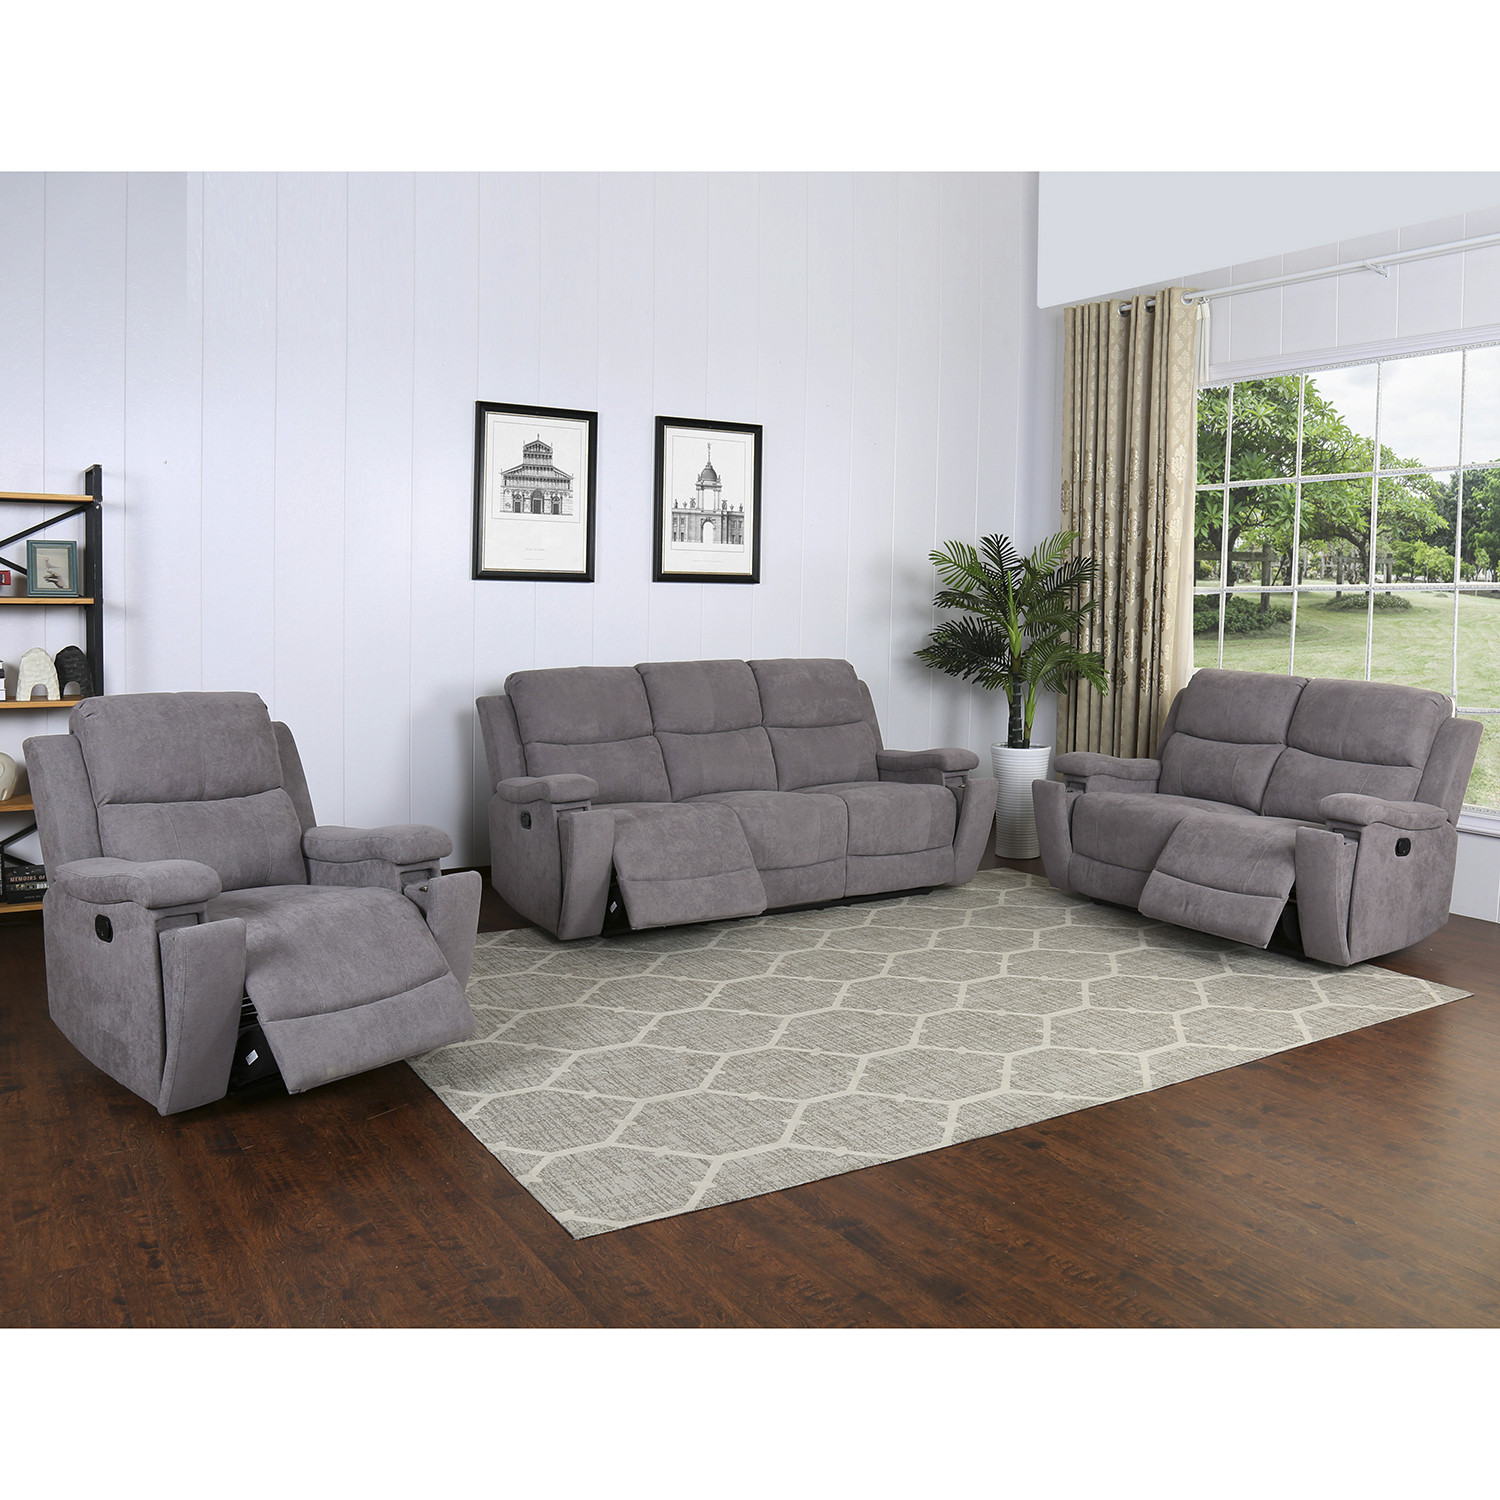 Ledbury 3 Seater Grey Fabric Manual Recliner Sofa Image 5